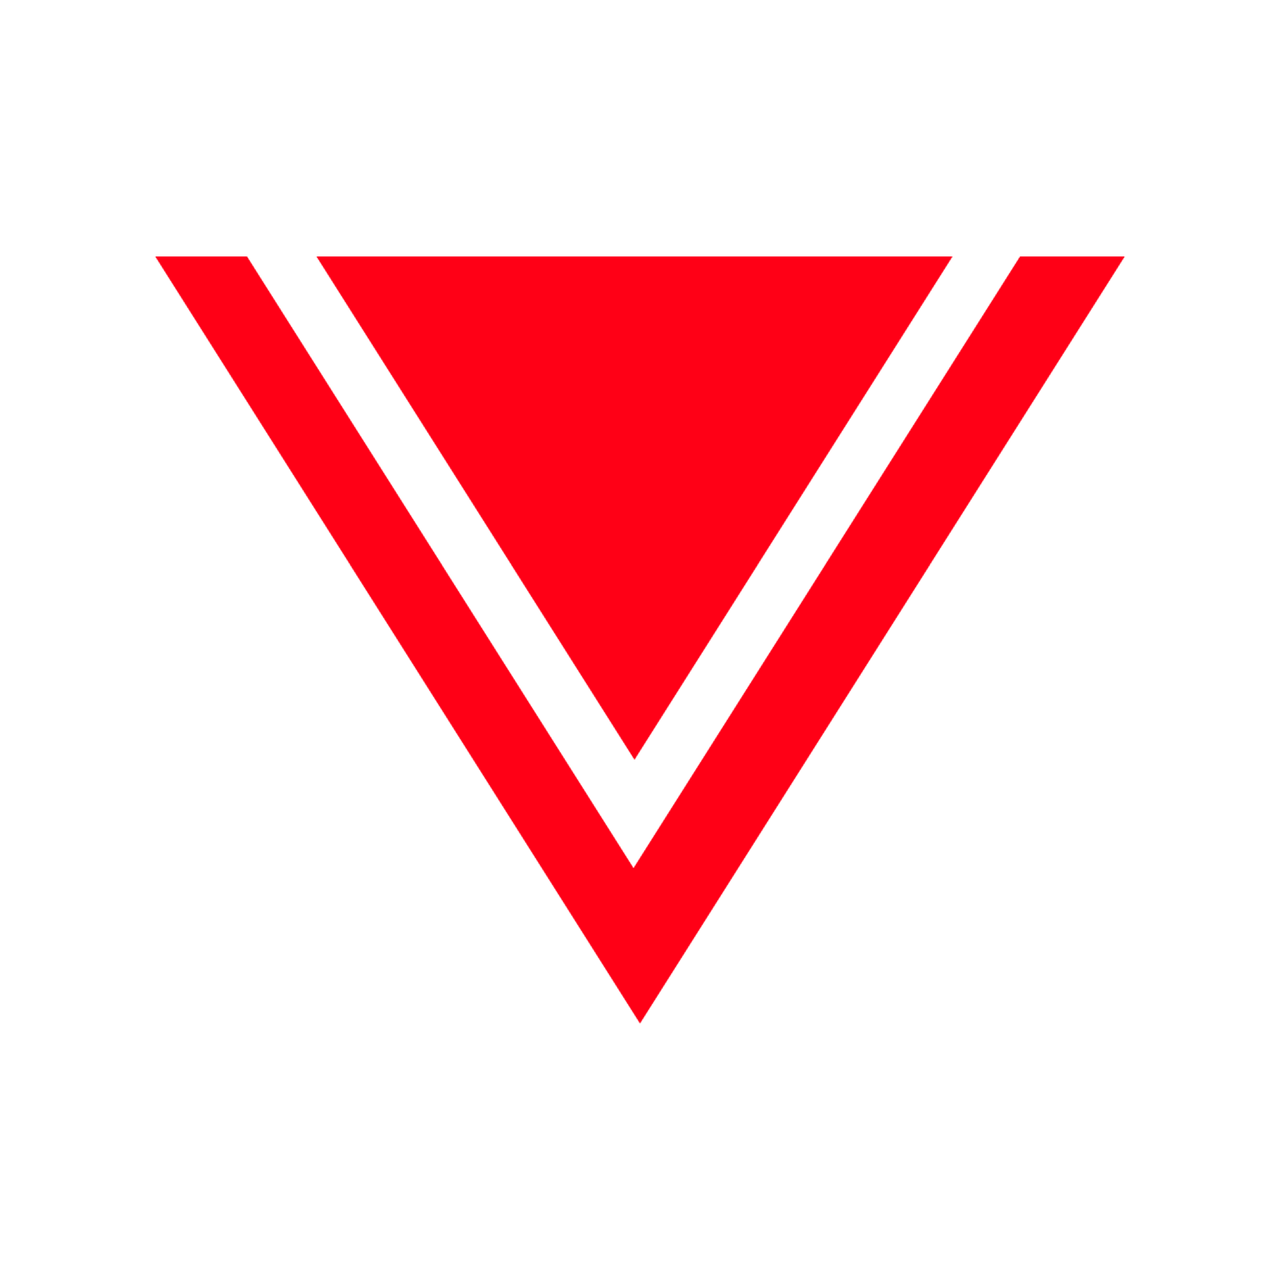 Prism symbol